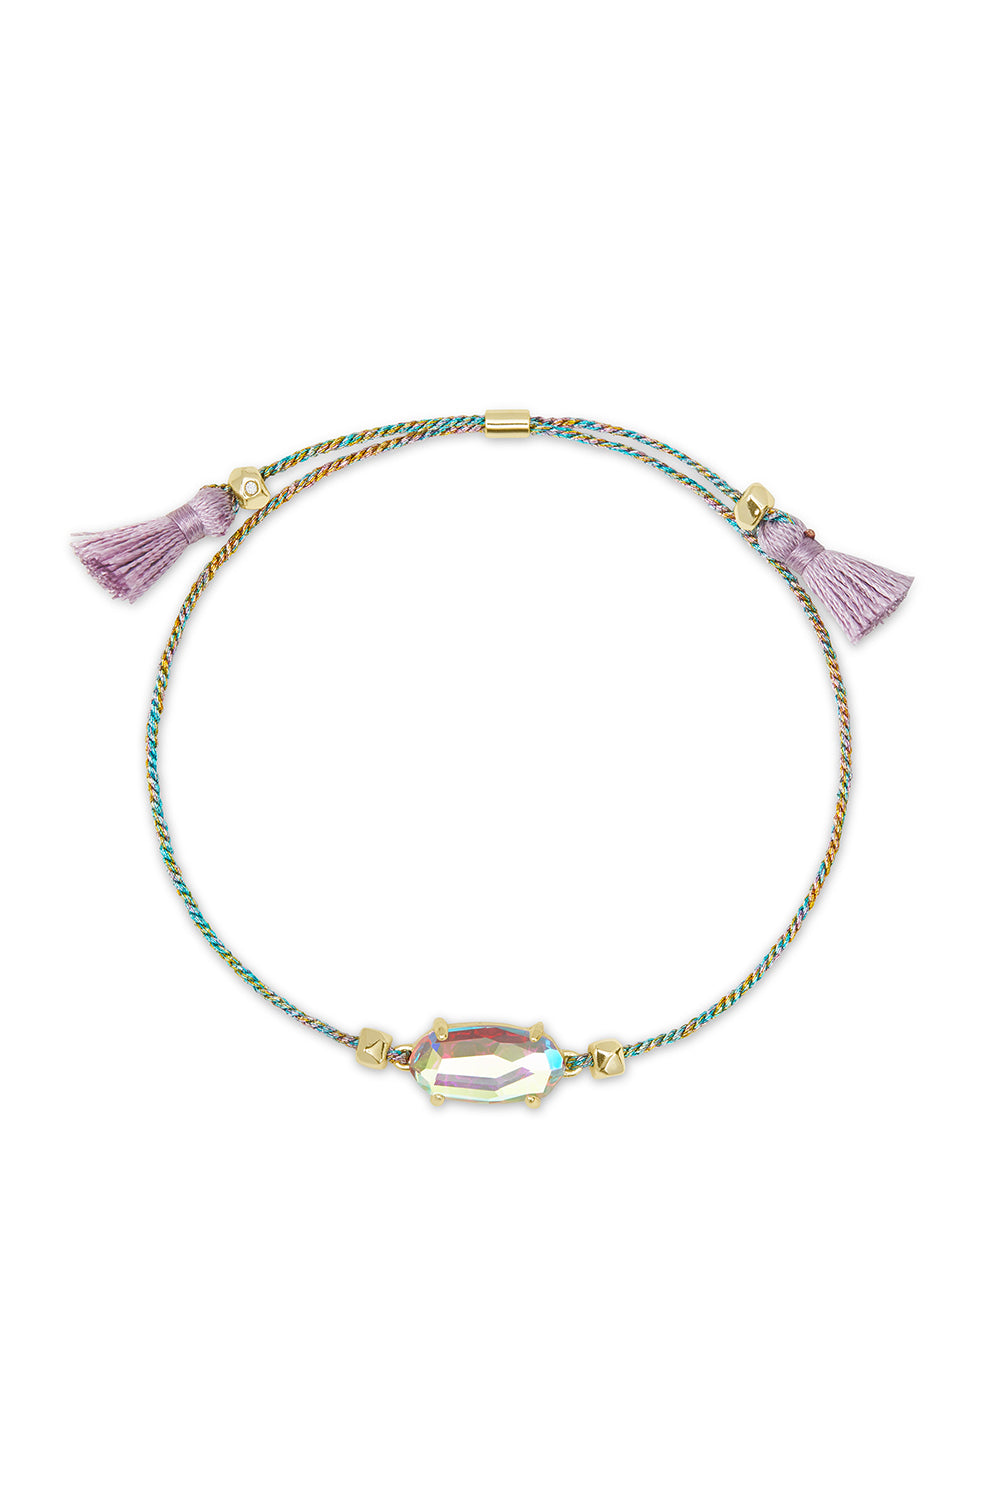 Kendra Scott: Everlyne Multicolor Cord Friendship Bracelet - Dichroic Glass